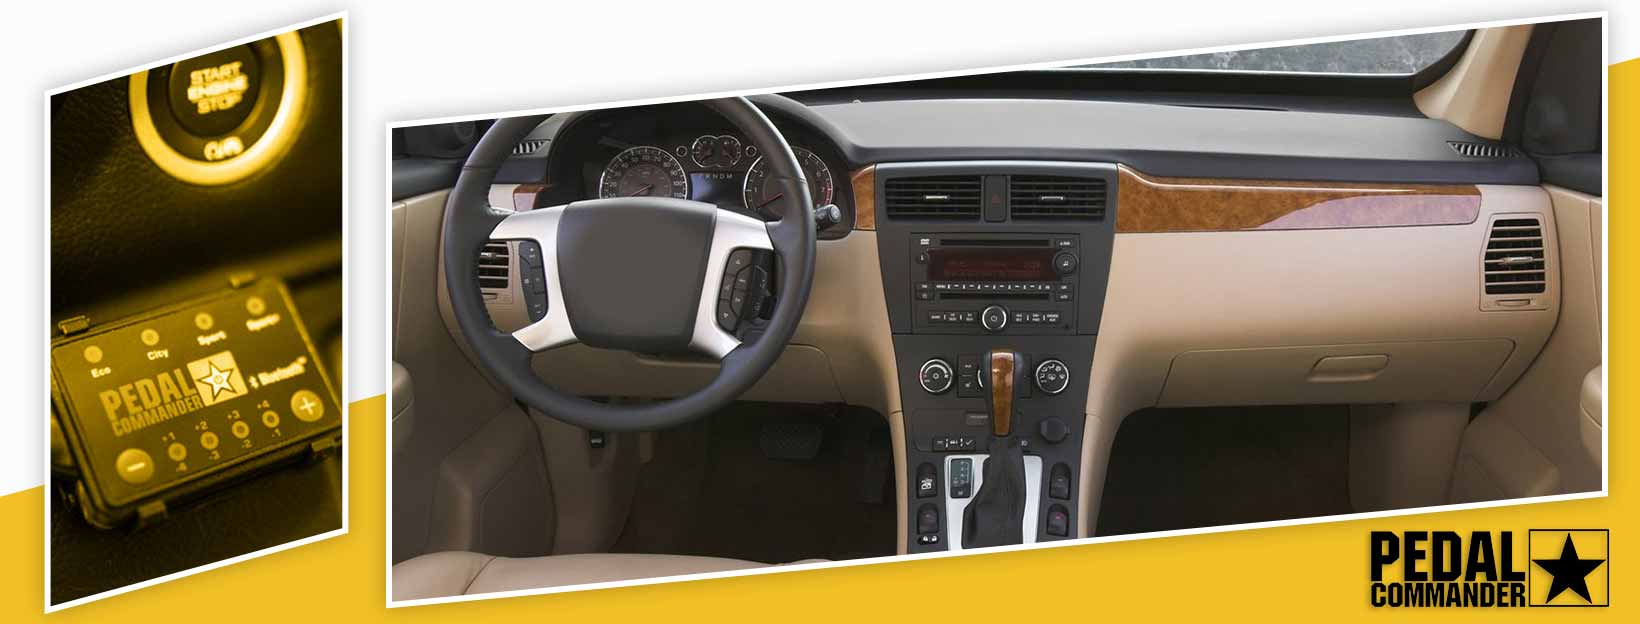 Pedal Commander for Suzuki XL7 - interior